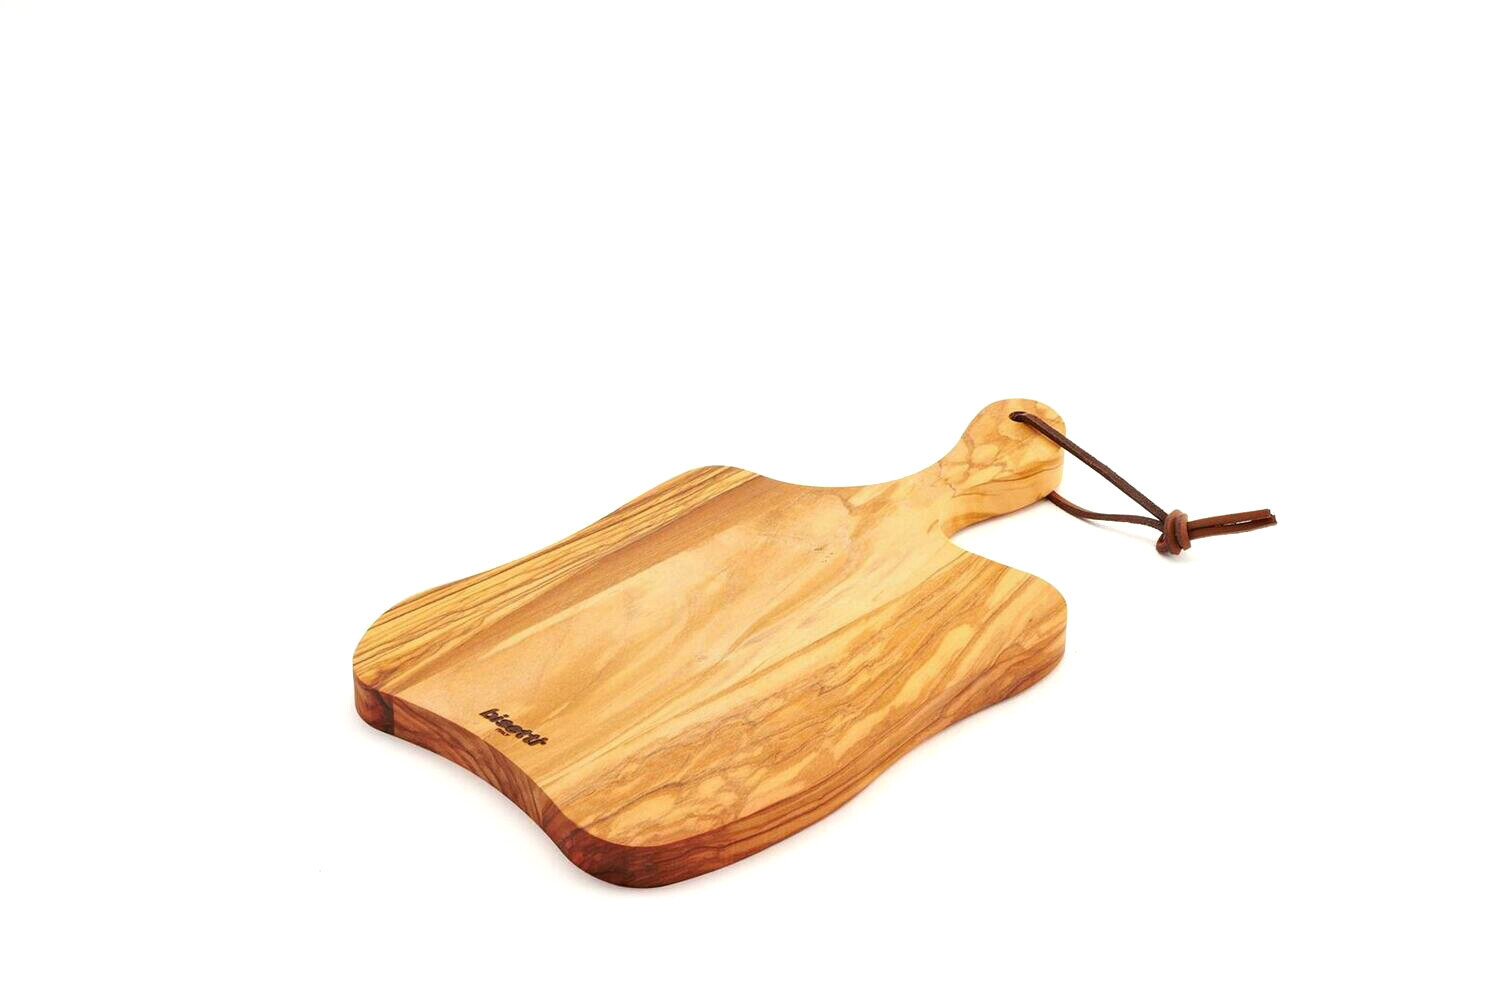 Rustic olive wood cutting board